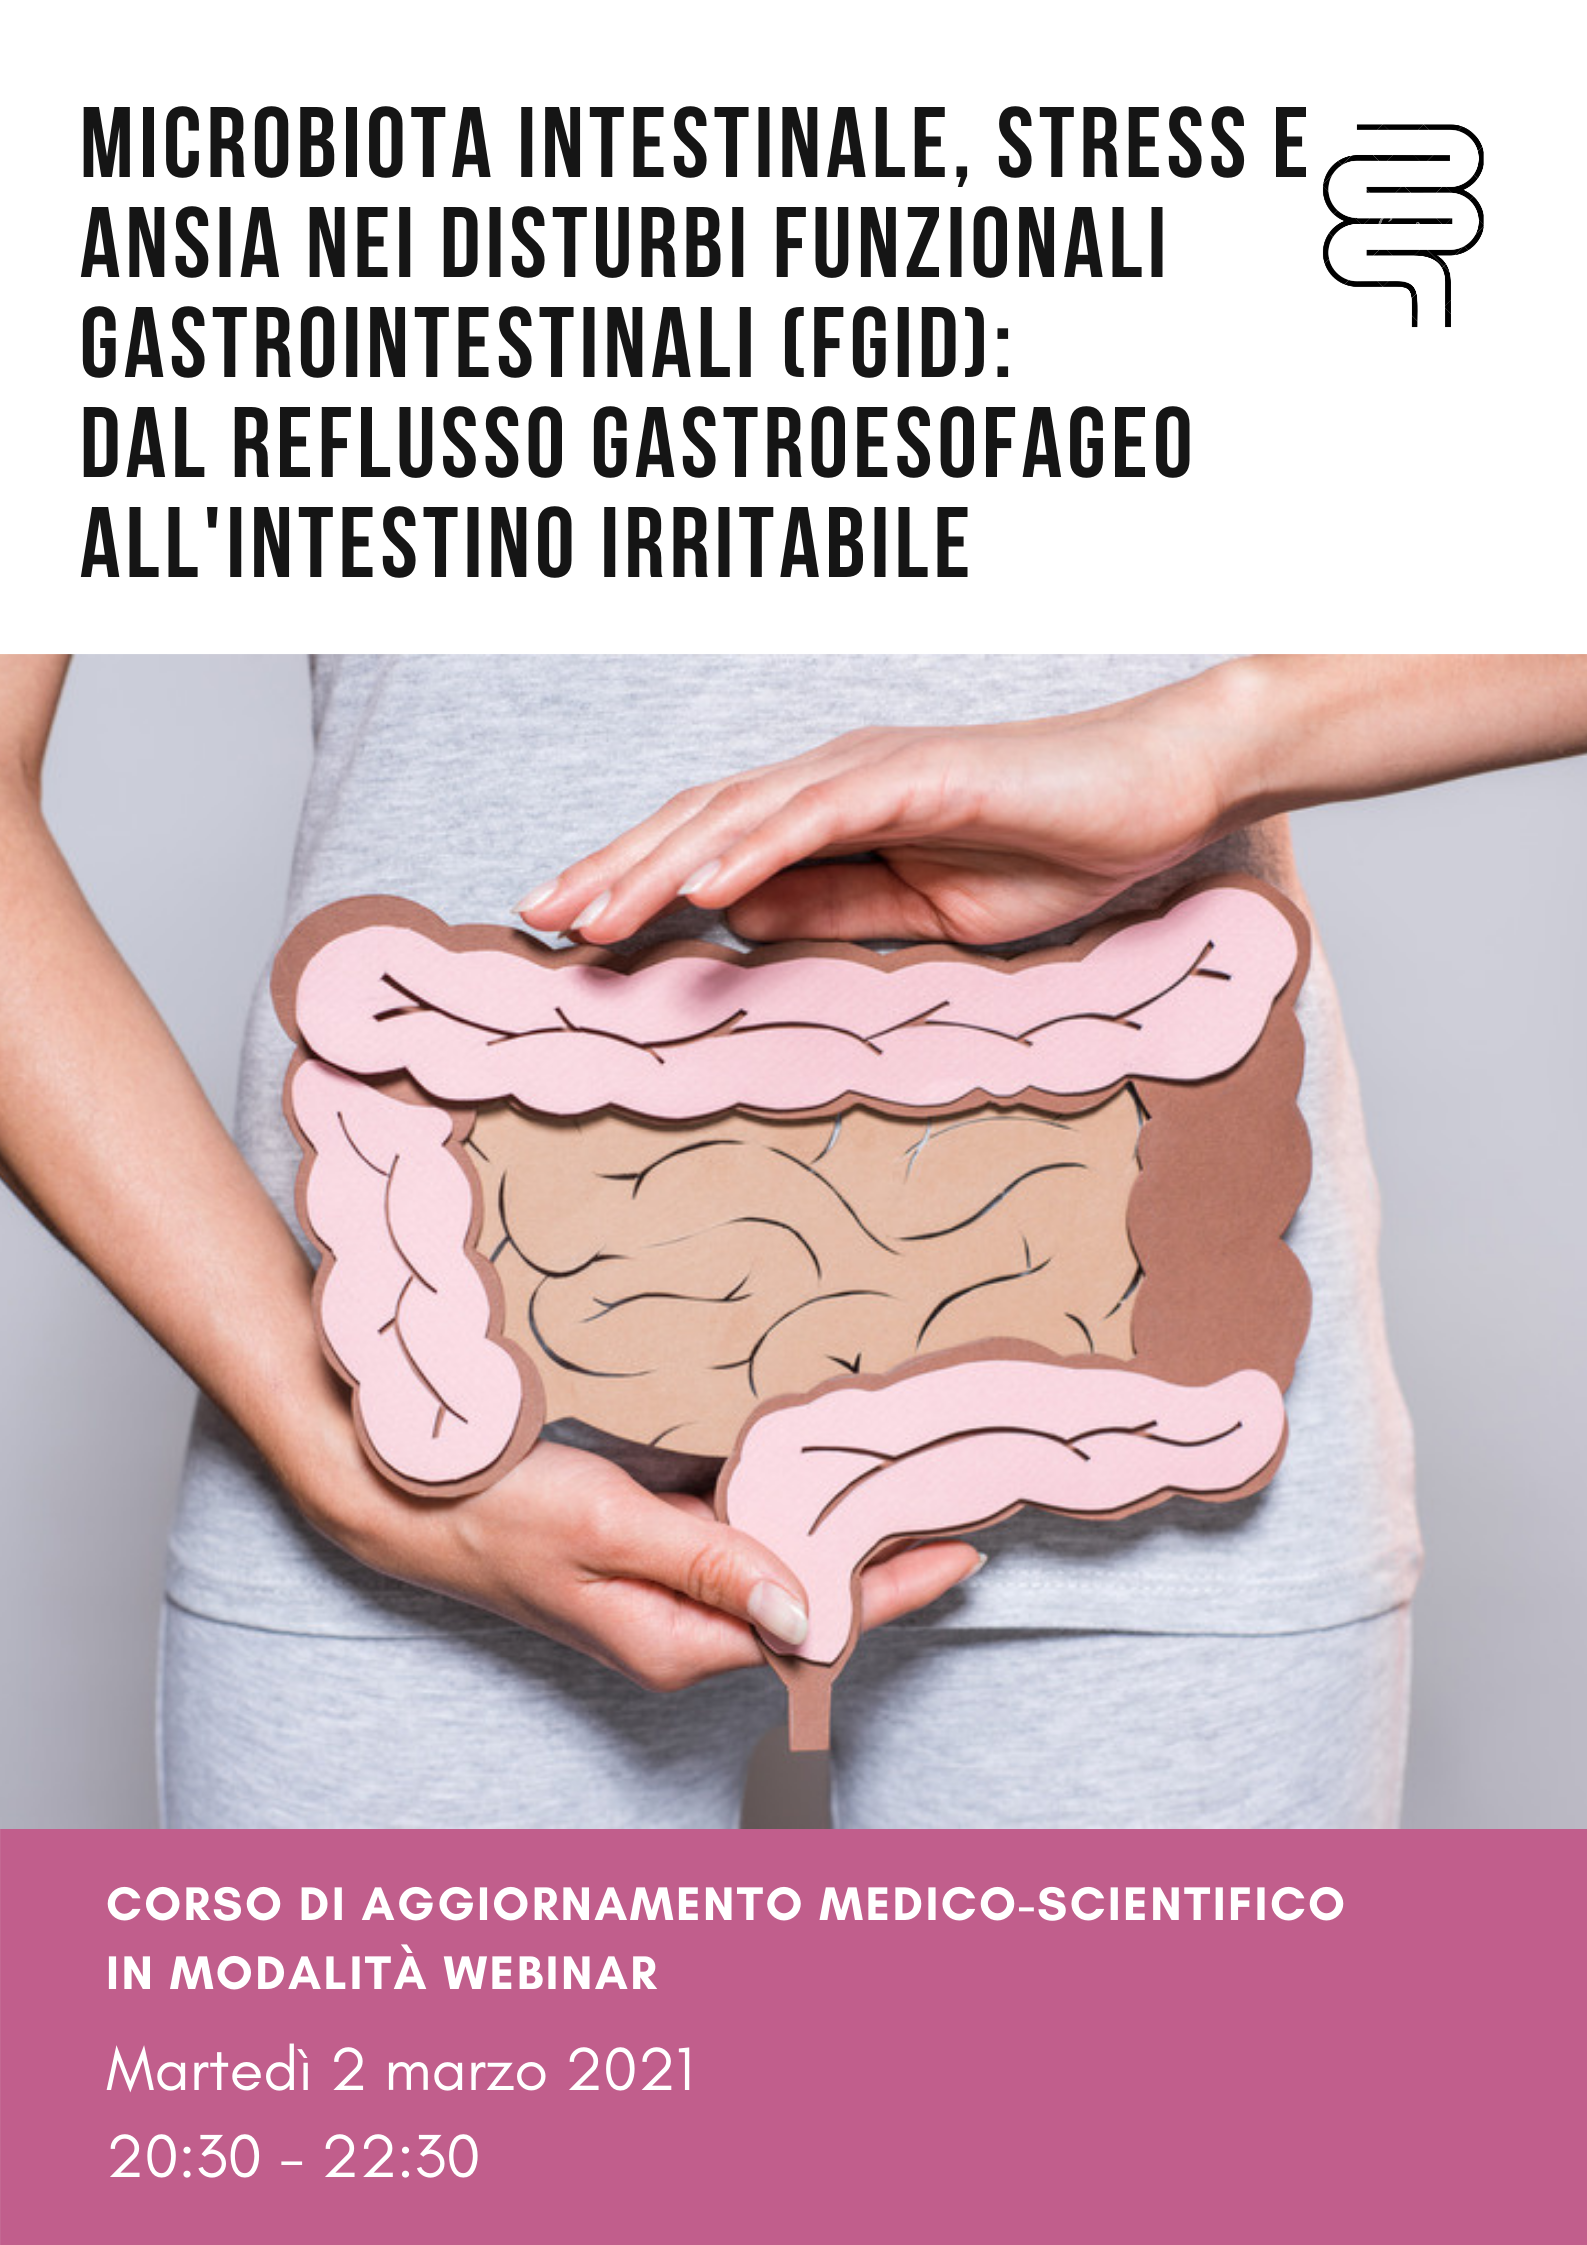 Microbiota intestinale, stress e ansia nei disturbi funzionali gastrointestinali (fgid): dal reflusso gastroesofageo all'intestino irritabile